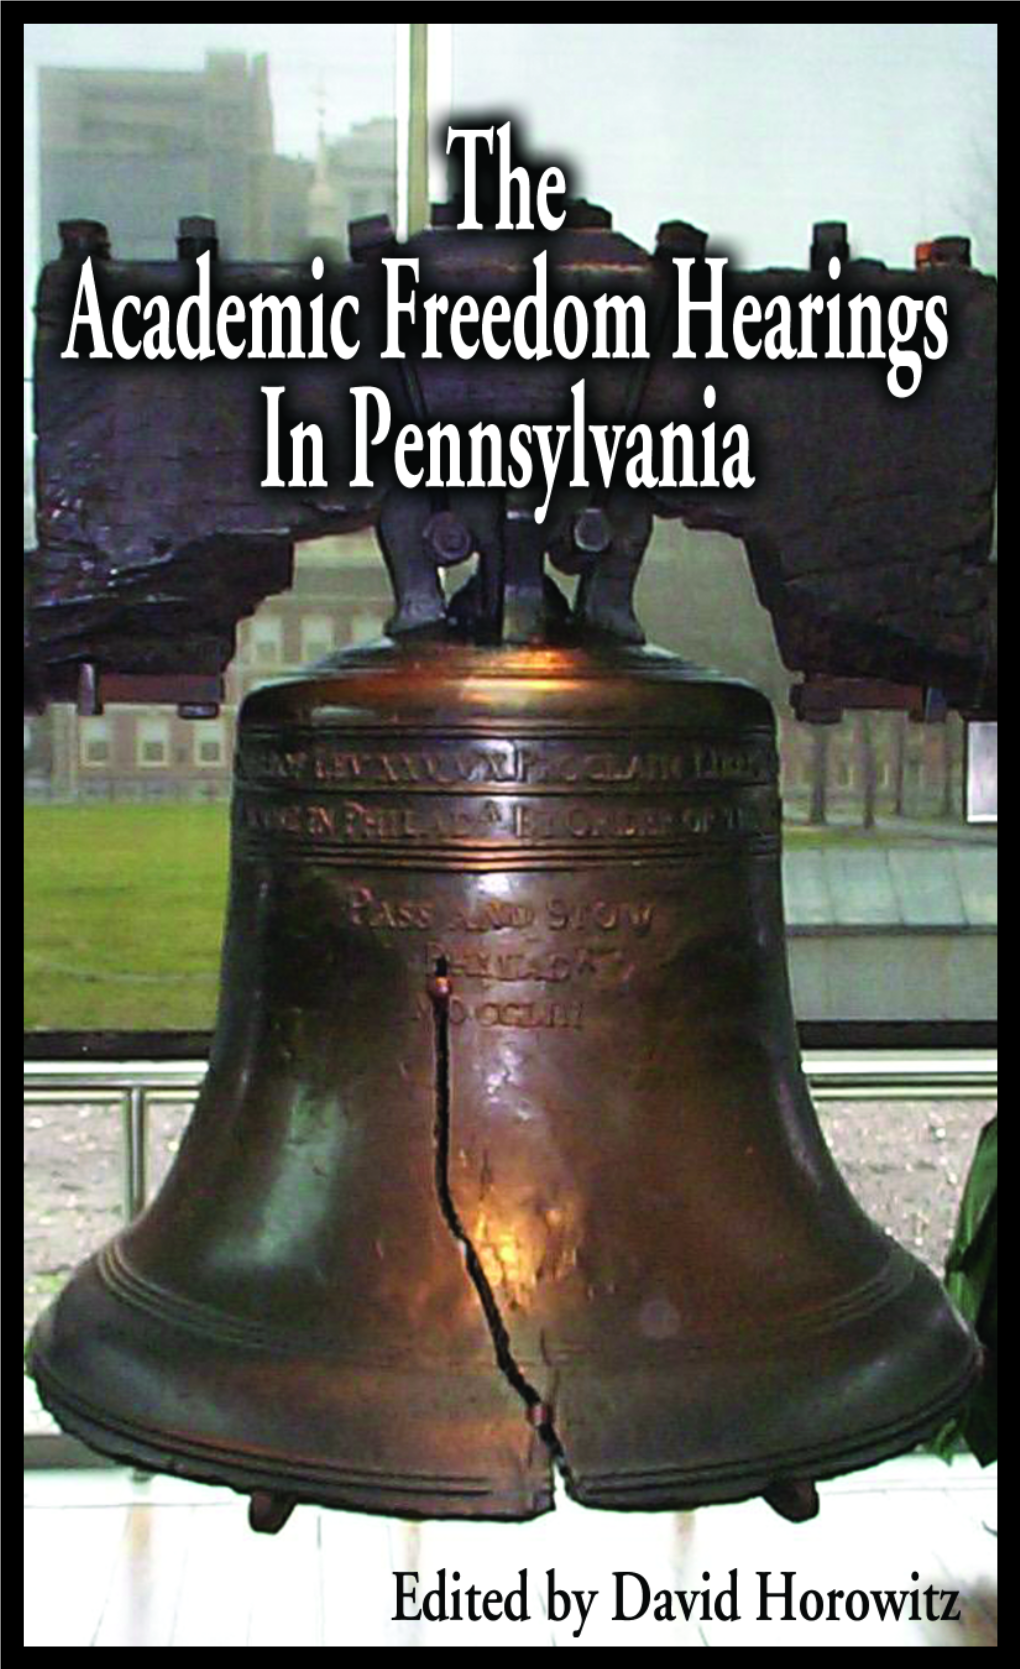 The Academic Freedom Hearings in Pennsylvania the Academic Freedom Hearings in Pennsylvania